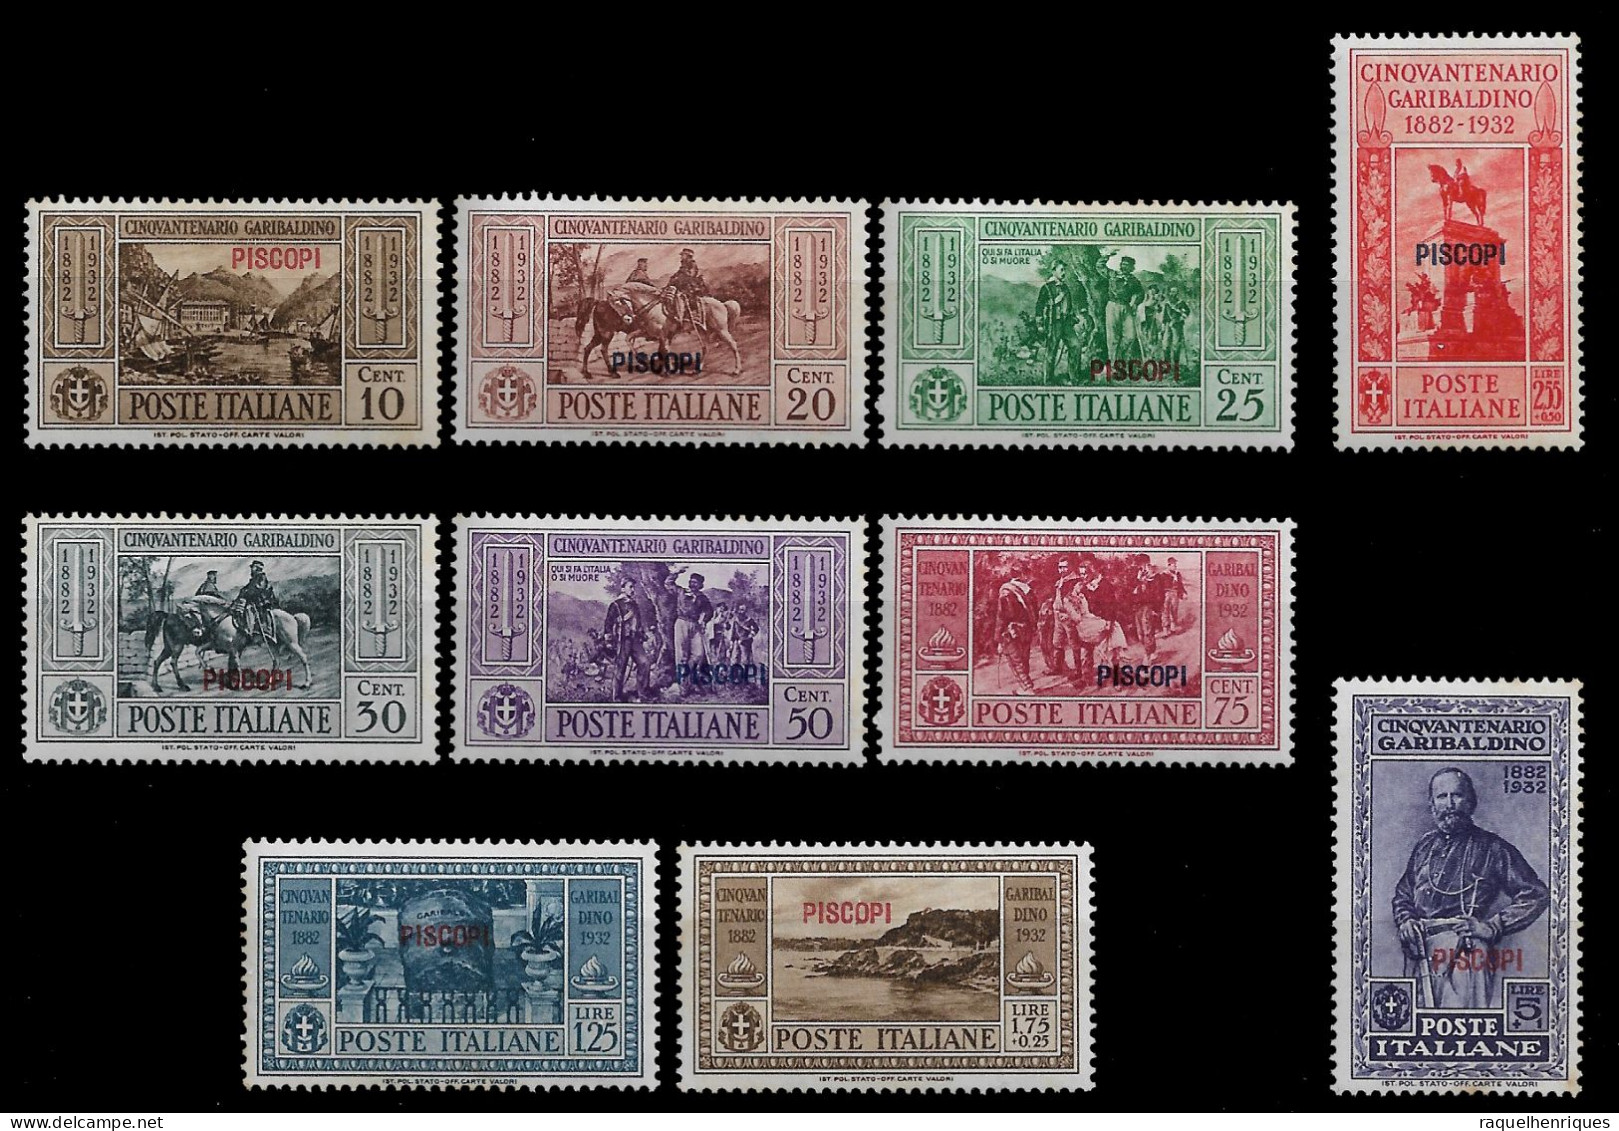 Postage Stamps Of Italian Colonies - PISCOPI 1932 Giuseppe Garibaldi SET MNH (BA5#399) - Ägäis (Piscopi)